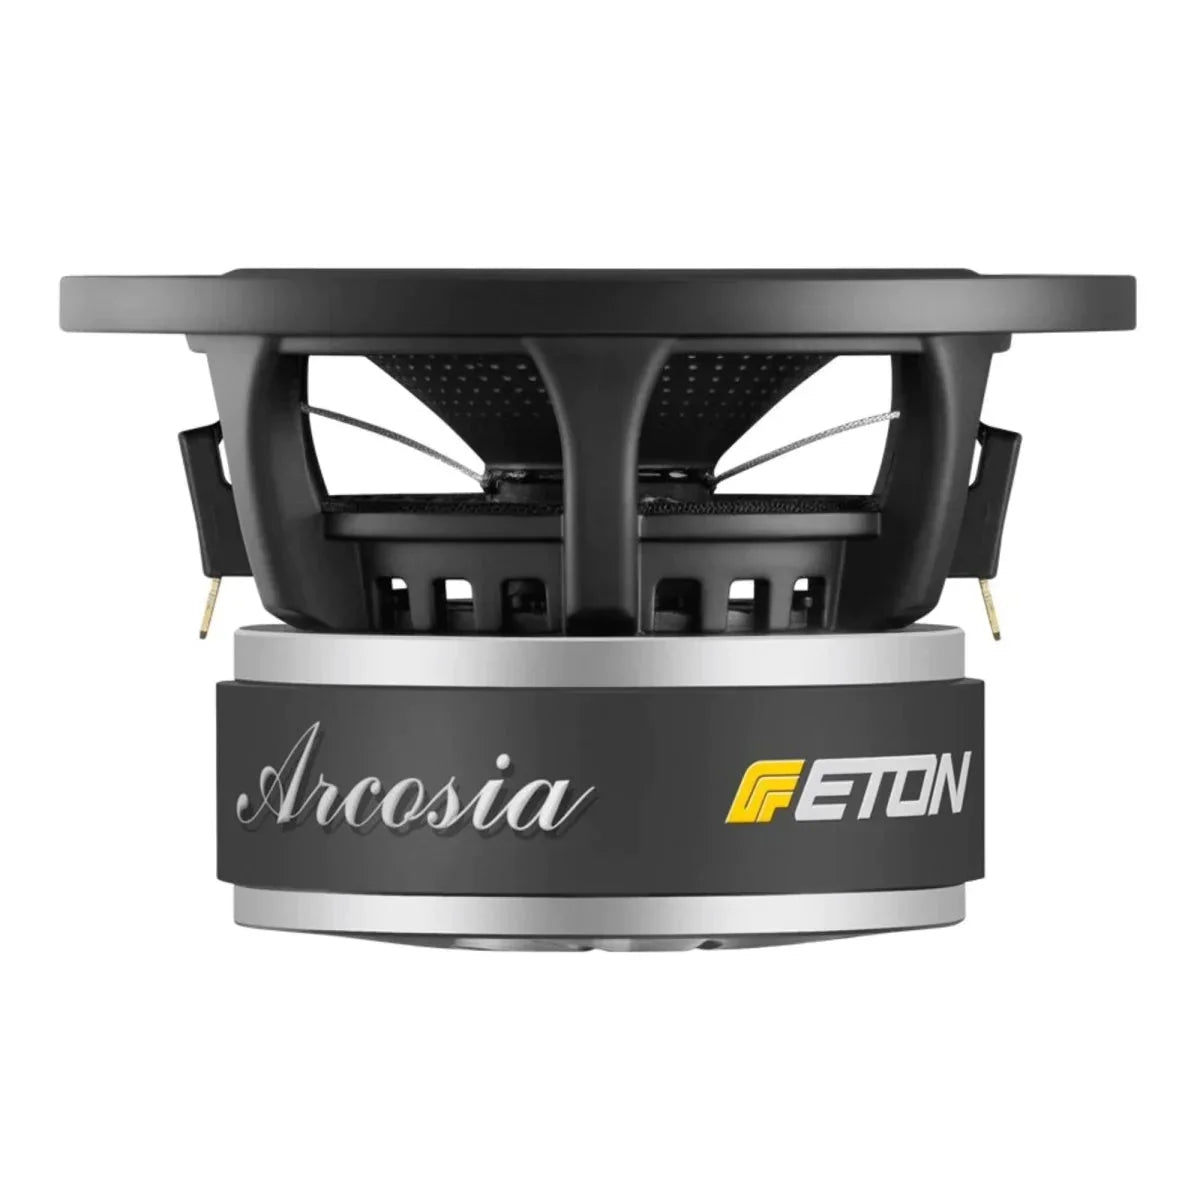 ETON-Arcosia 4-218-4" (10cm) Tiefmitteltöner-Masori.de